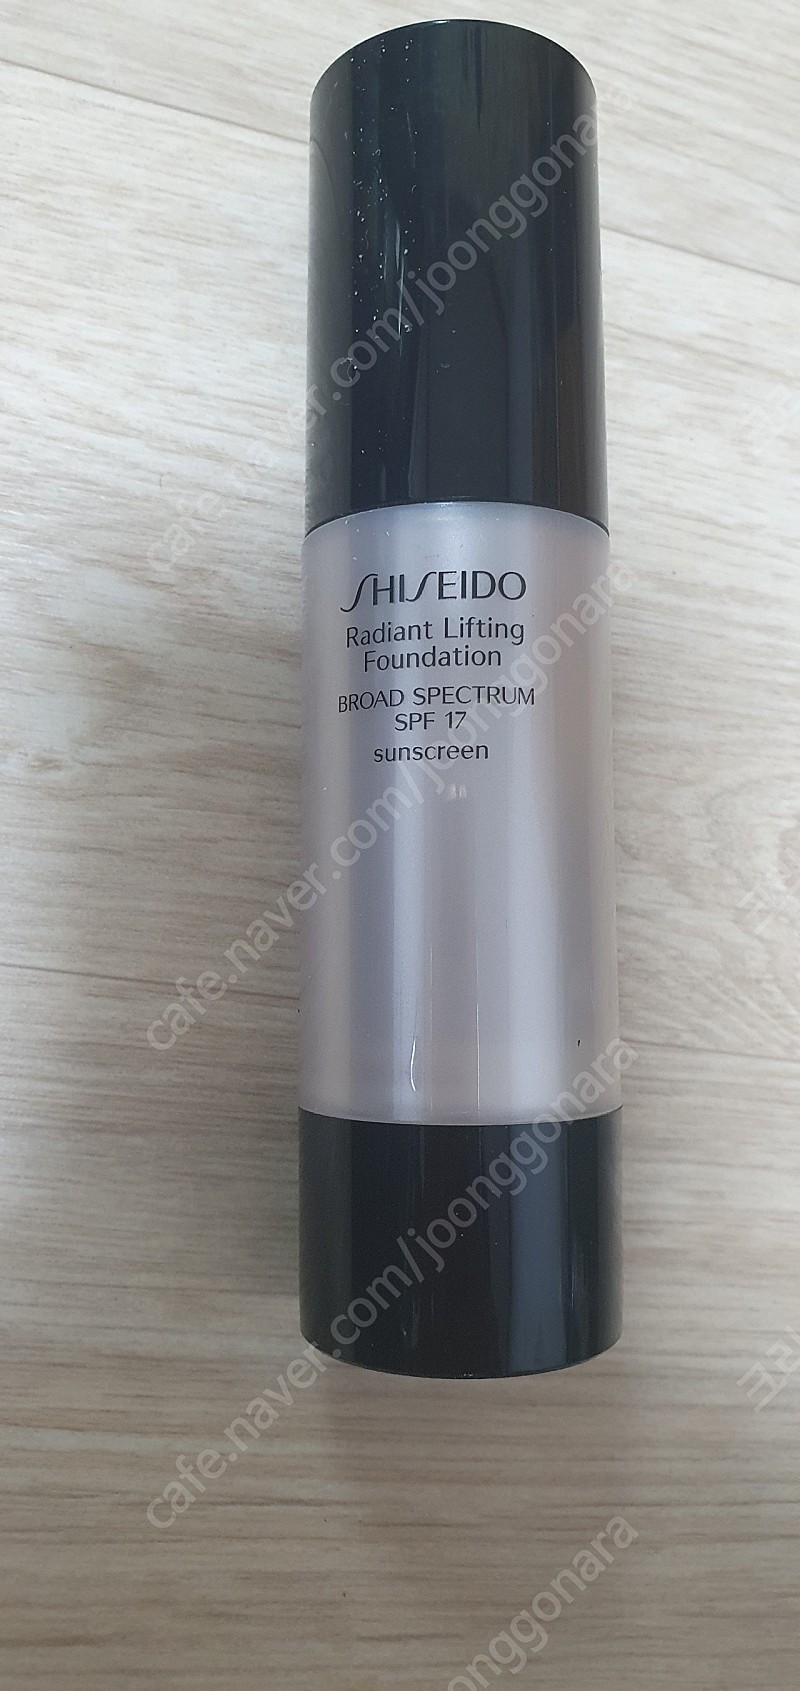 shiseido radiant lifting foundation broad spectrum spf 17 sunscreen